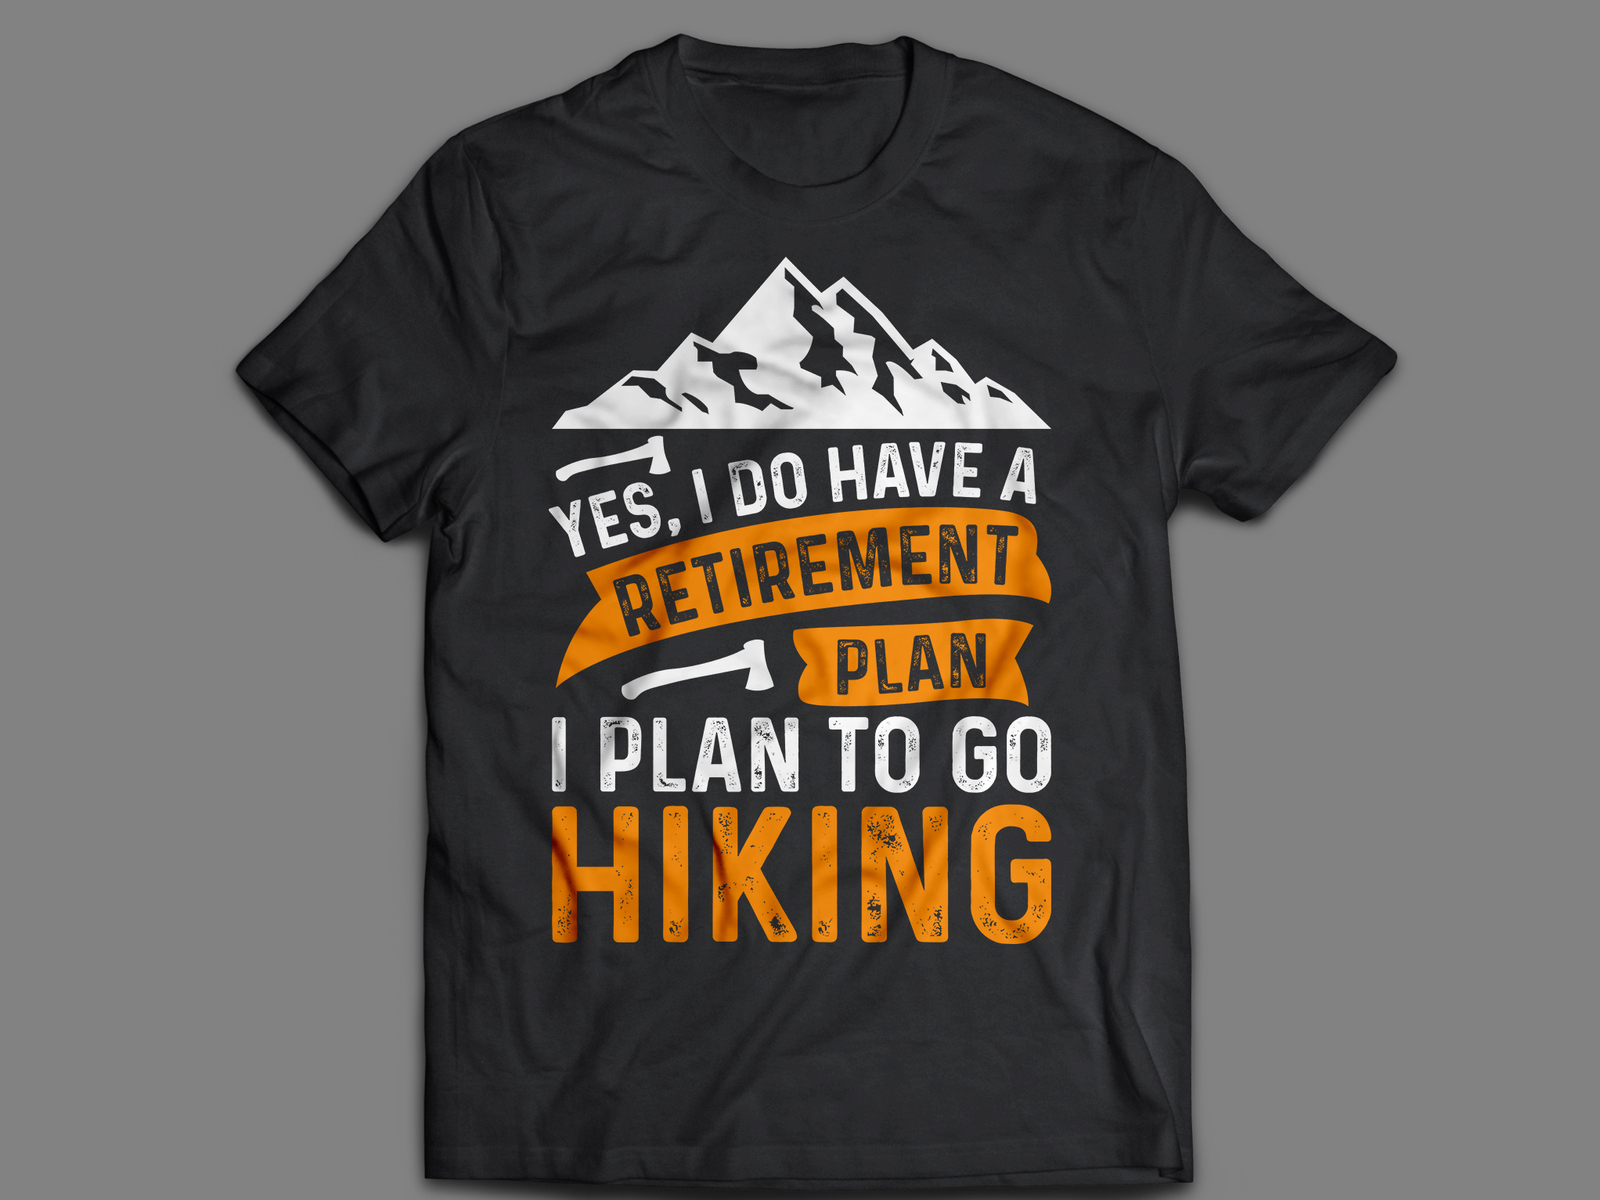 Hiking T-shirt Design by Al Mamun on Dribbble